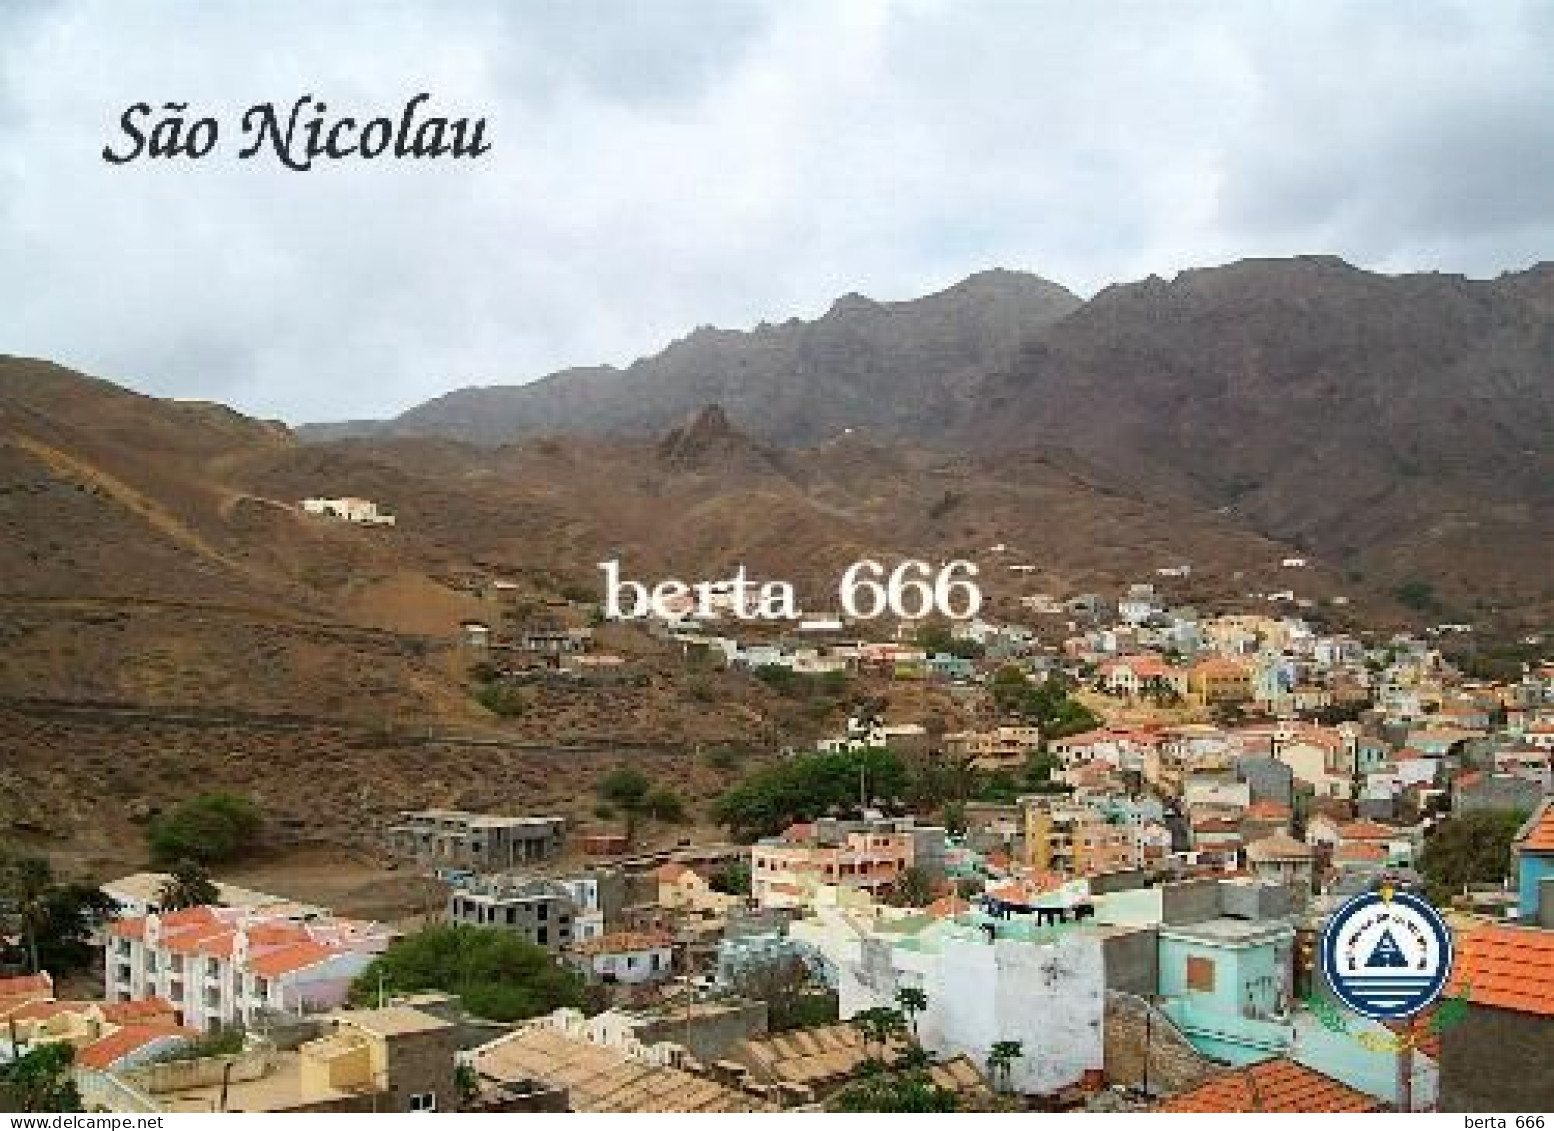 Cape Verde Sao Nicolau Island New Postcard - Capo Verde